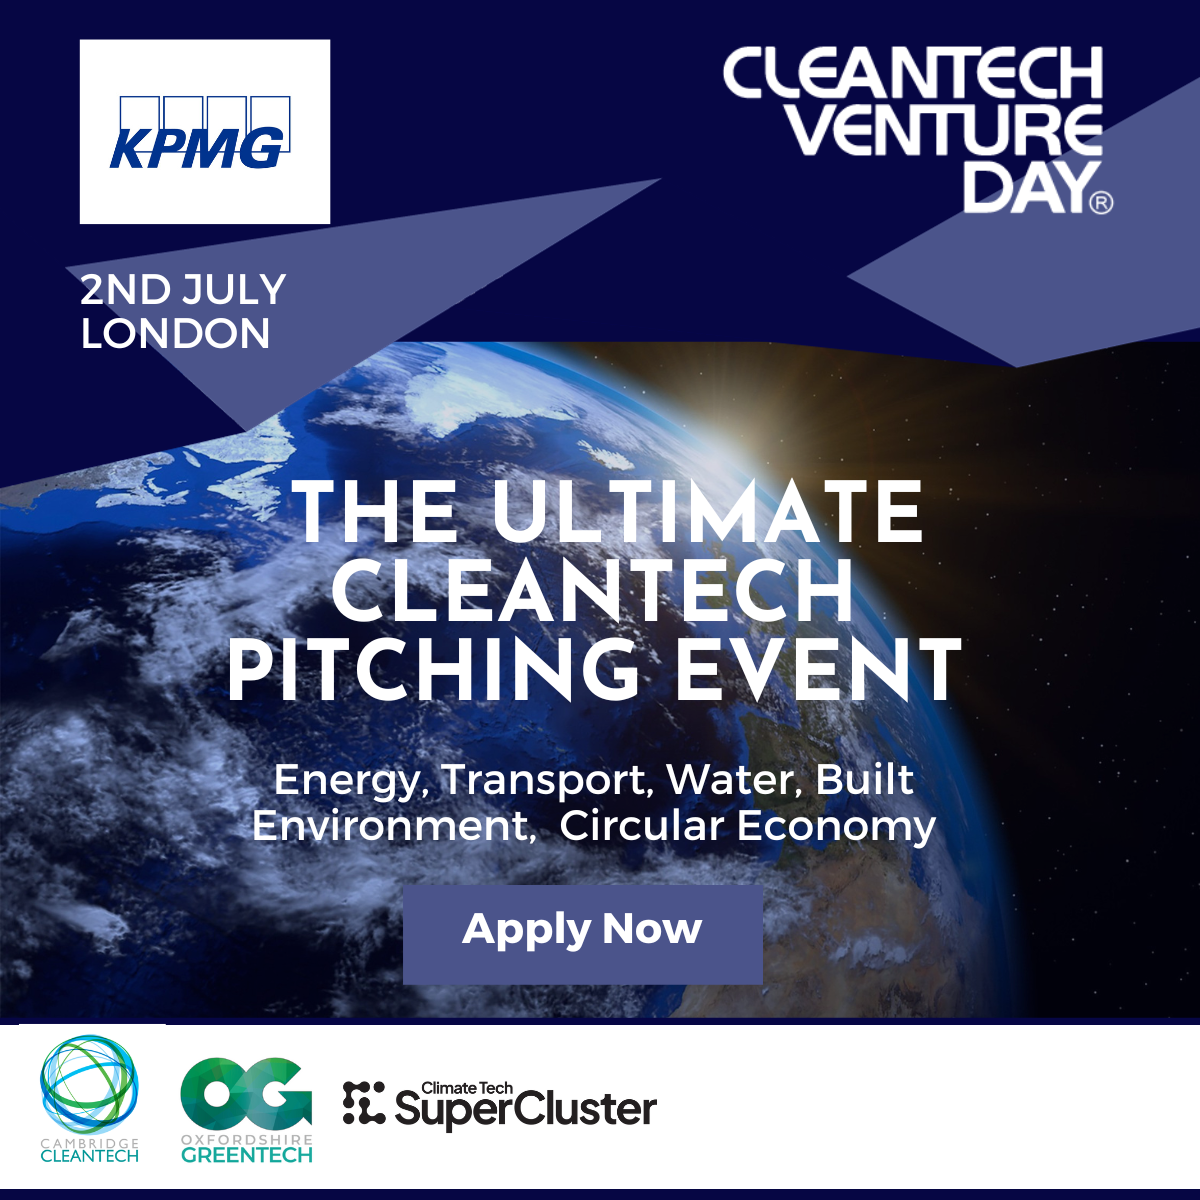 Cleantech Venture Day - Applications Open